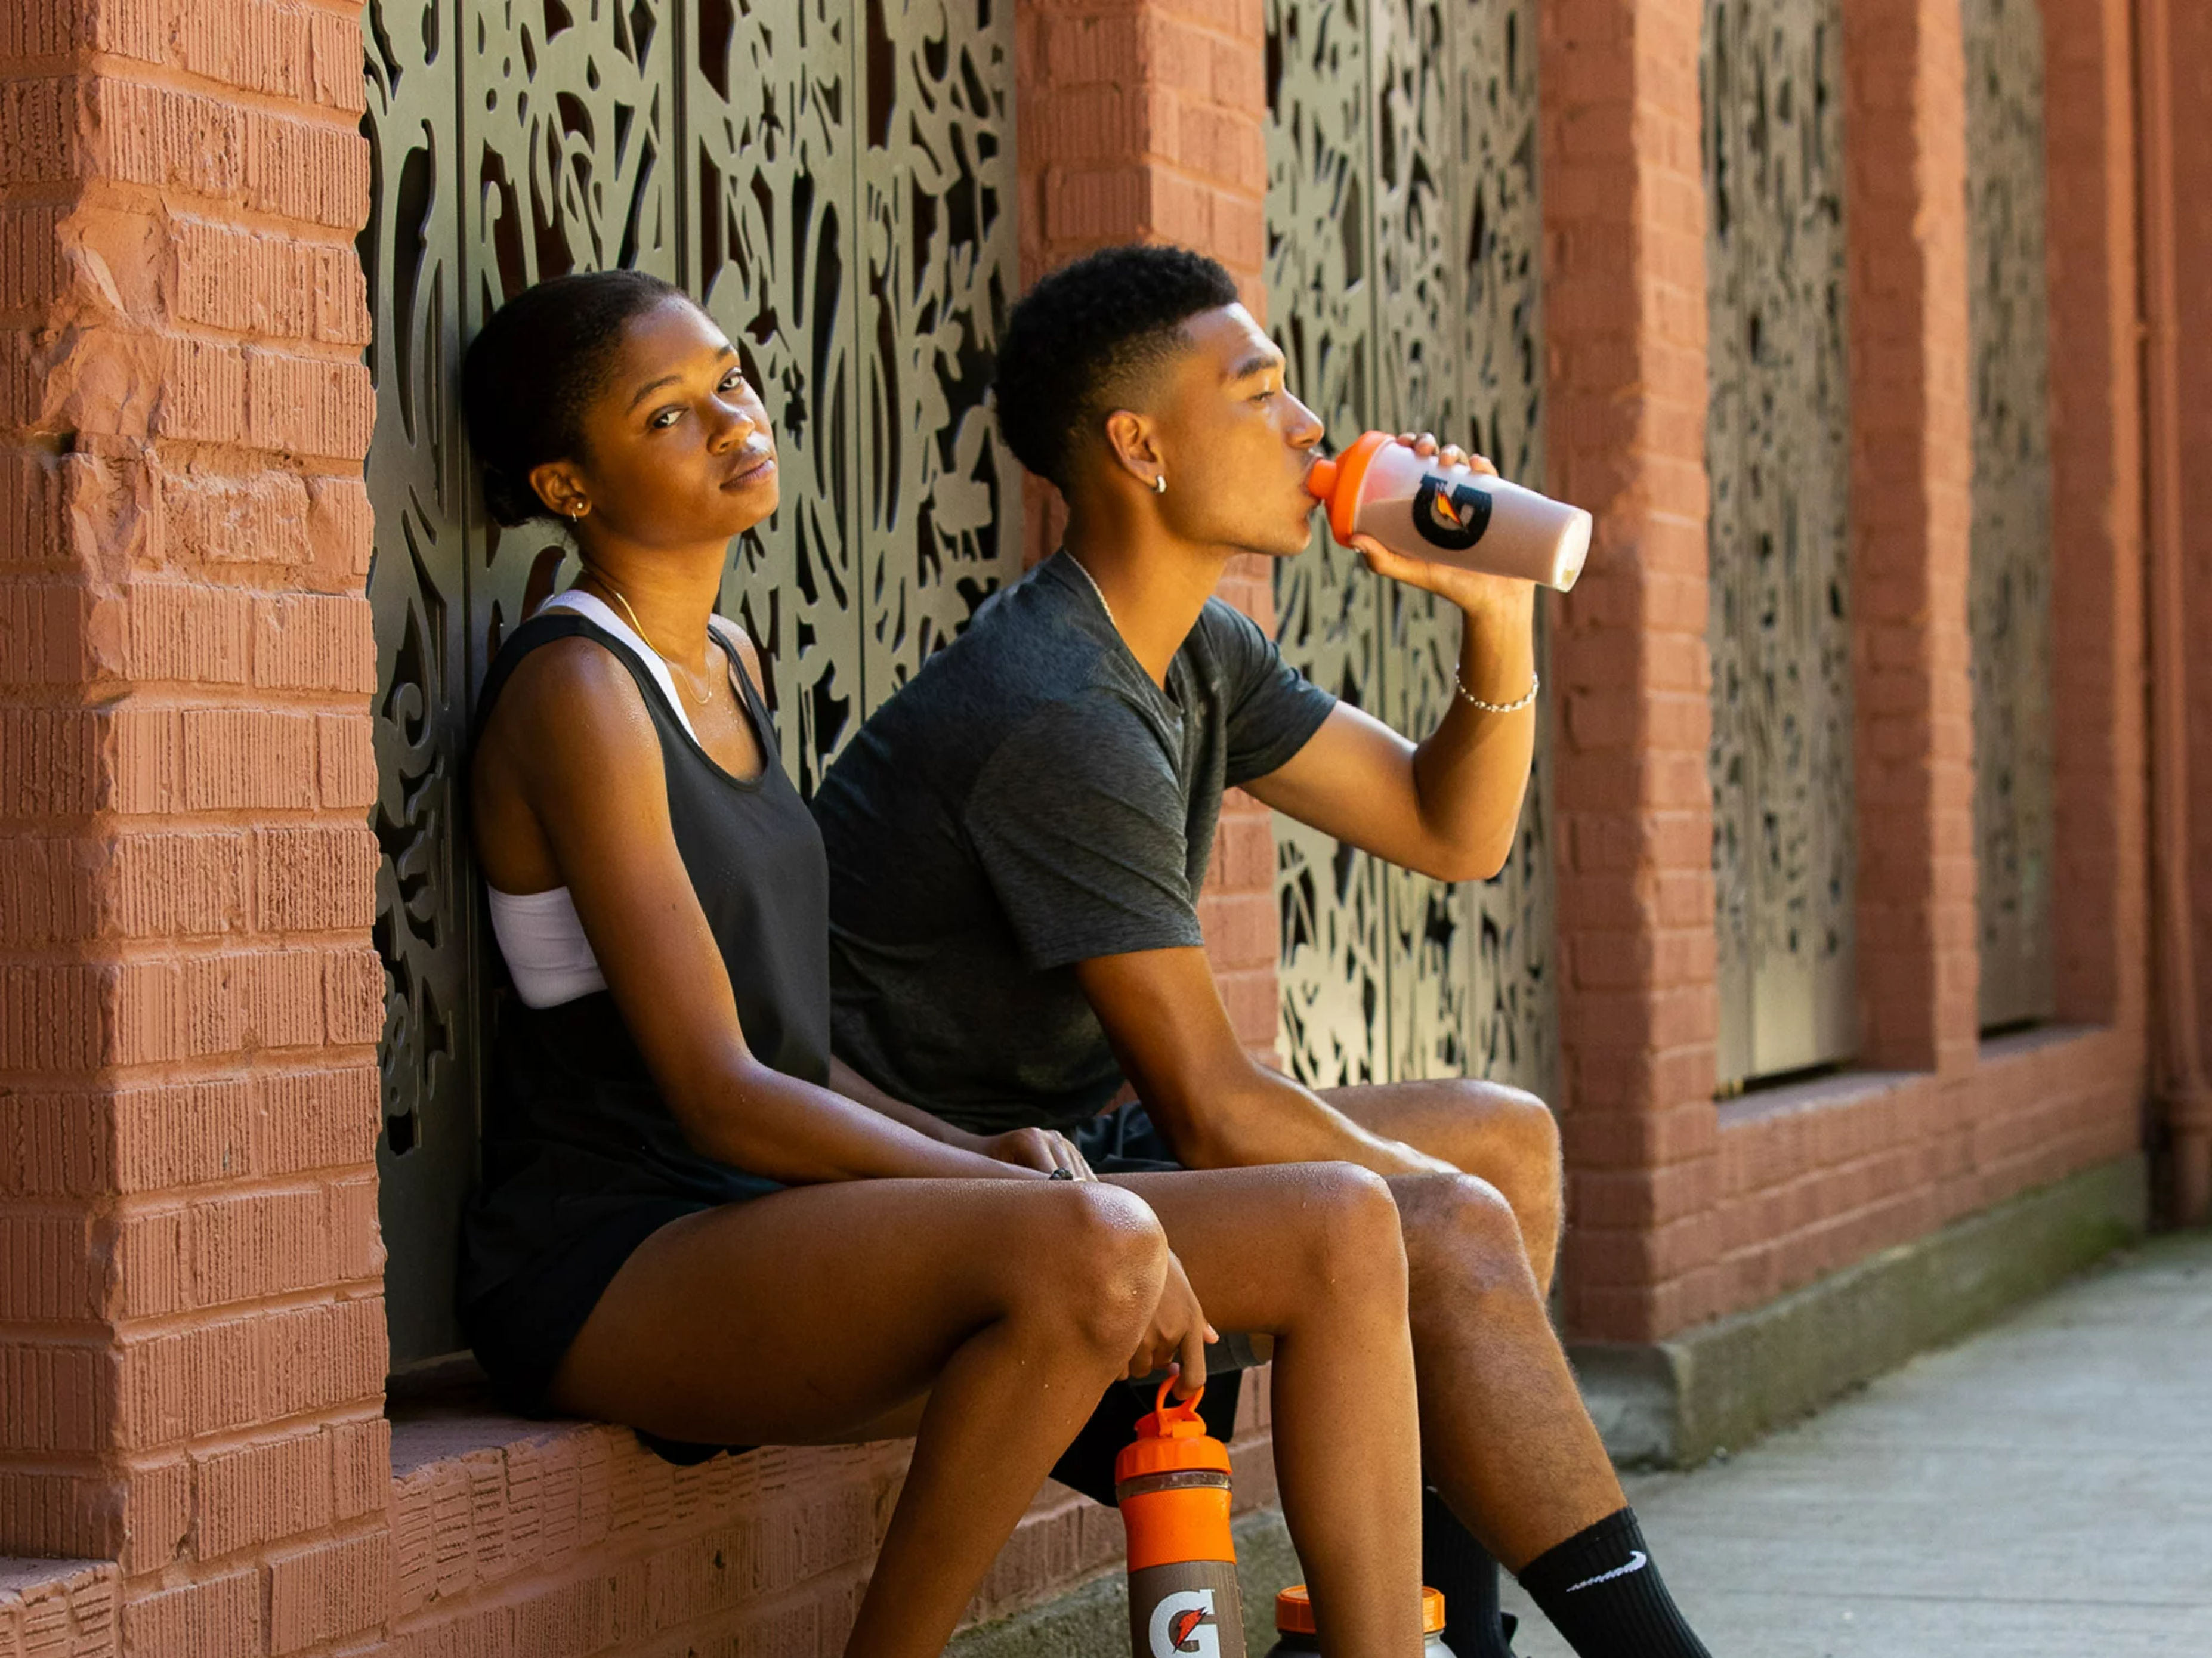 Athletes drinking out of Gatorade shaker bottles